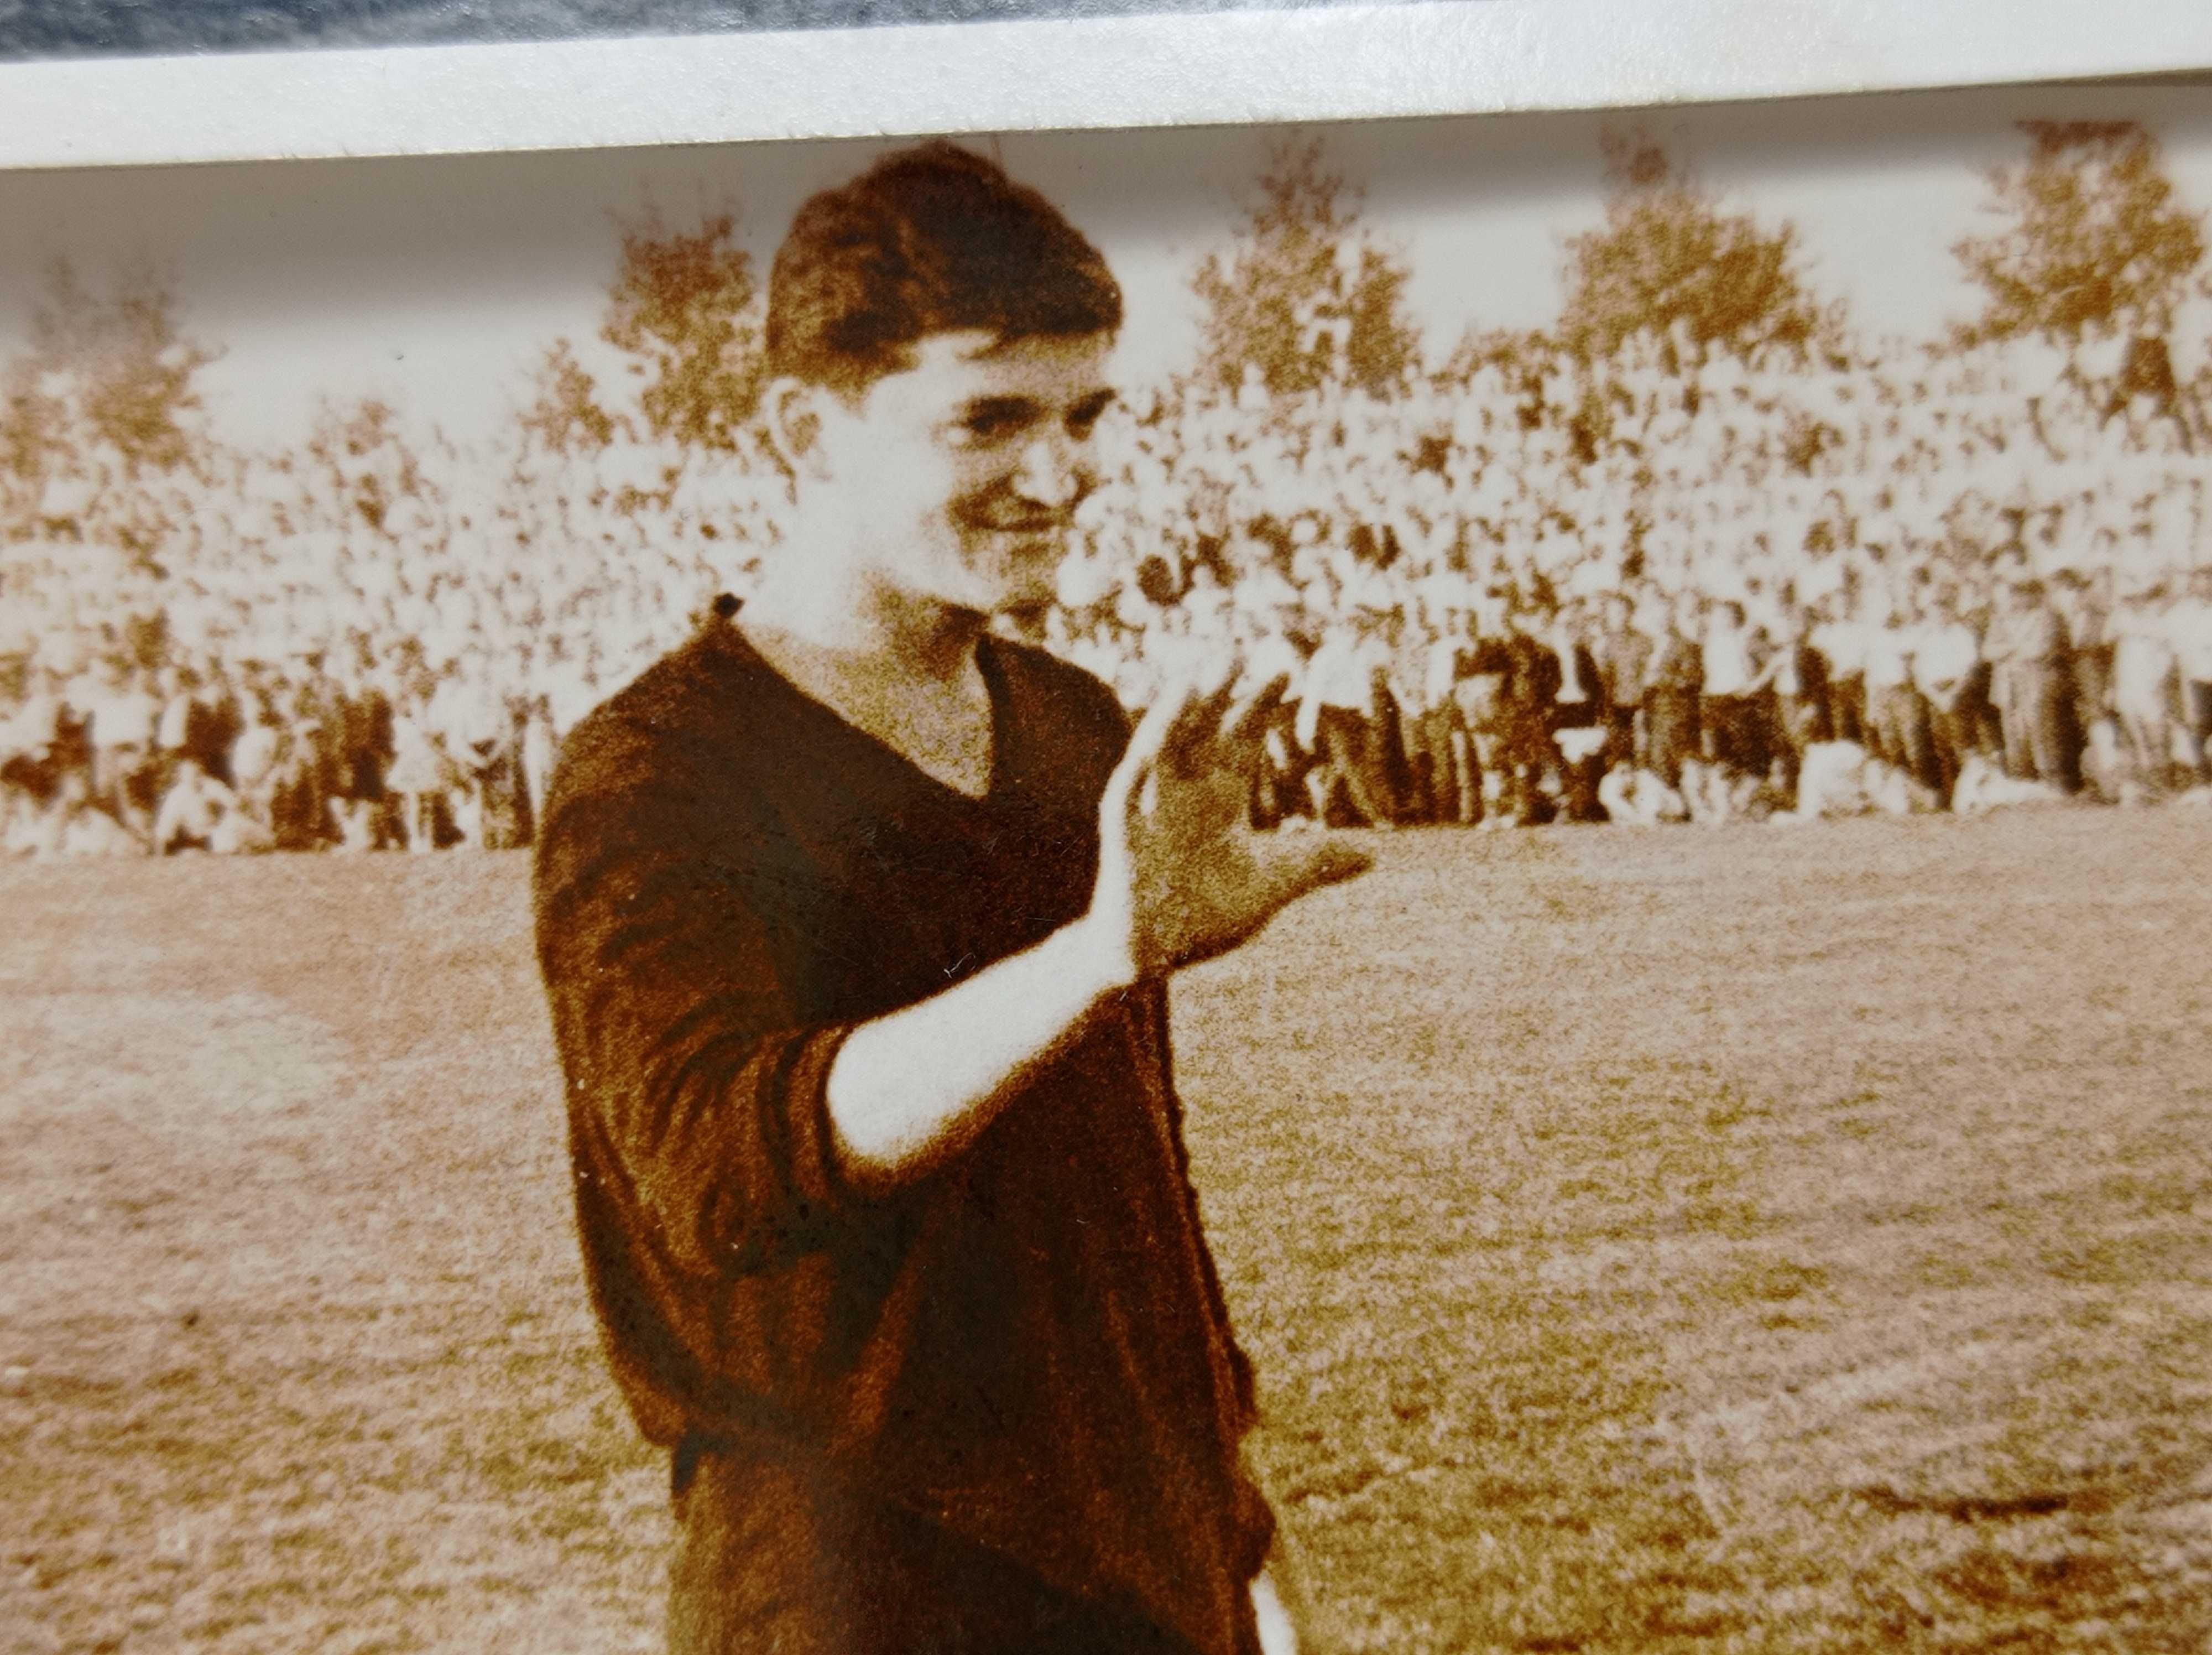 Stal Mielec - piłka nożna - kolekcja zdjęć z lat 1960-70 - 19 sztuk.